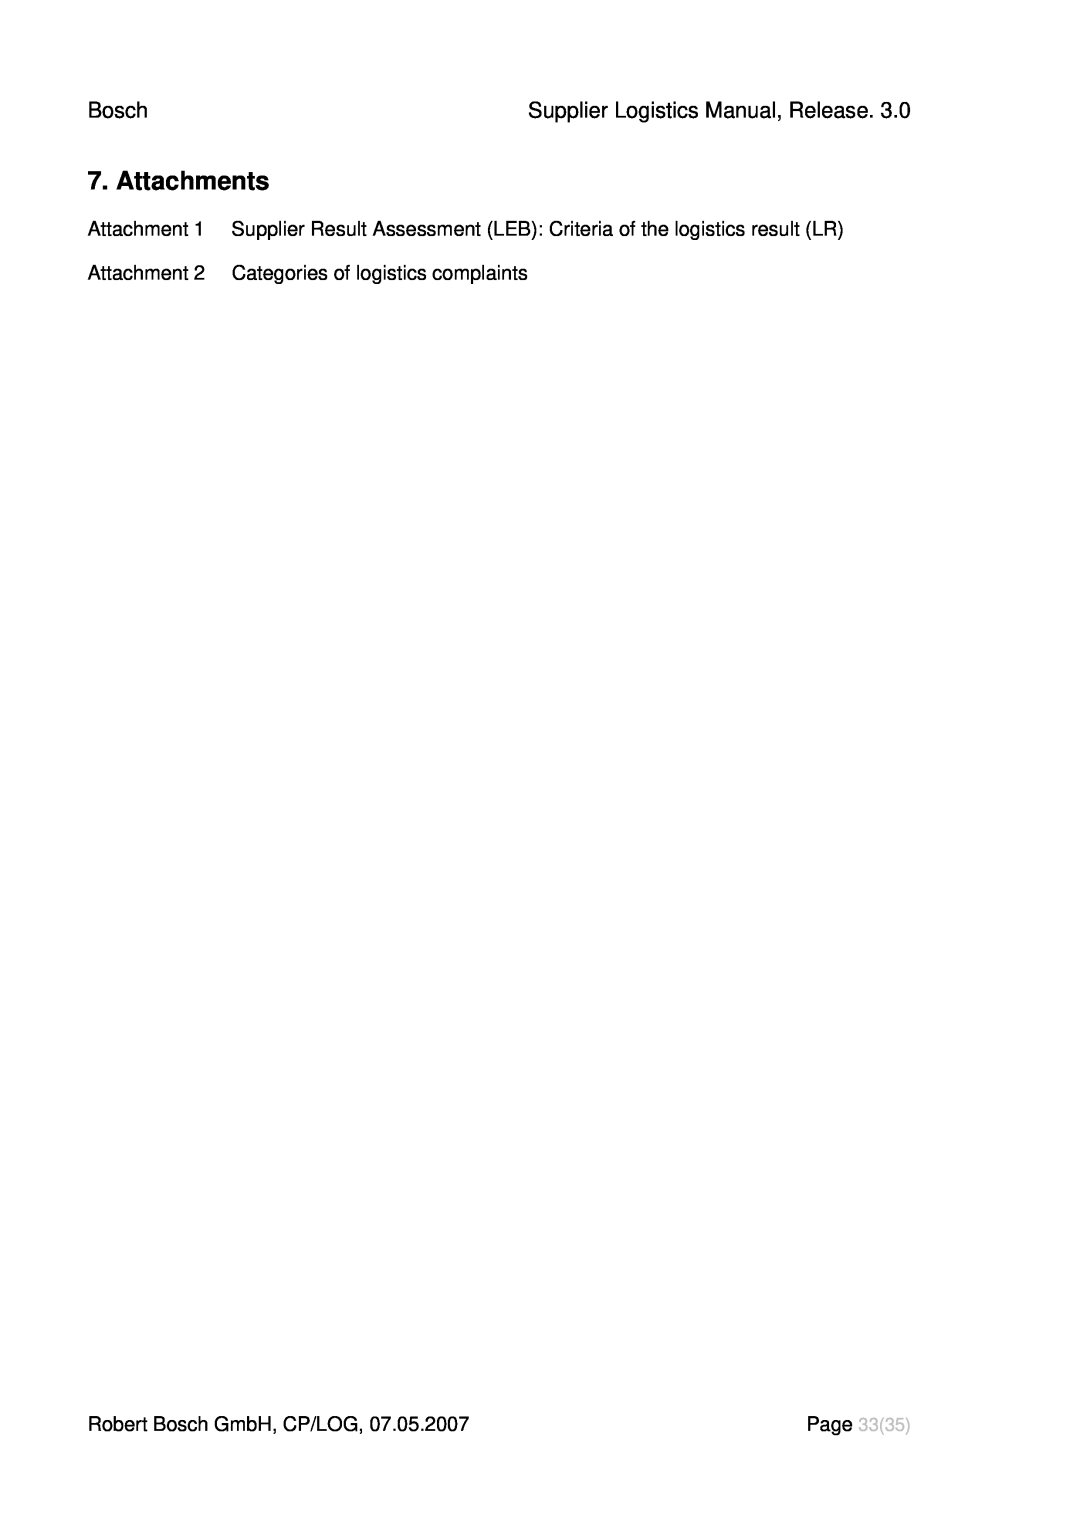 Bosch Appliances 3 manual Attachments, Supplier Logistics Manual, Release, Robert Bosch GmbH, CP/LOG, Page 